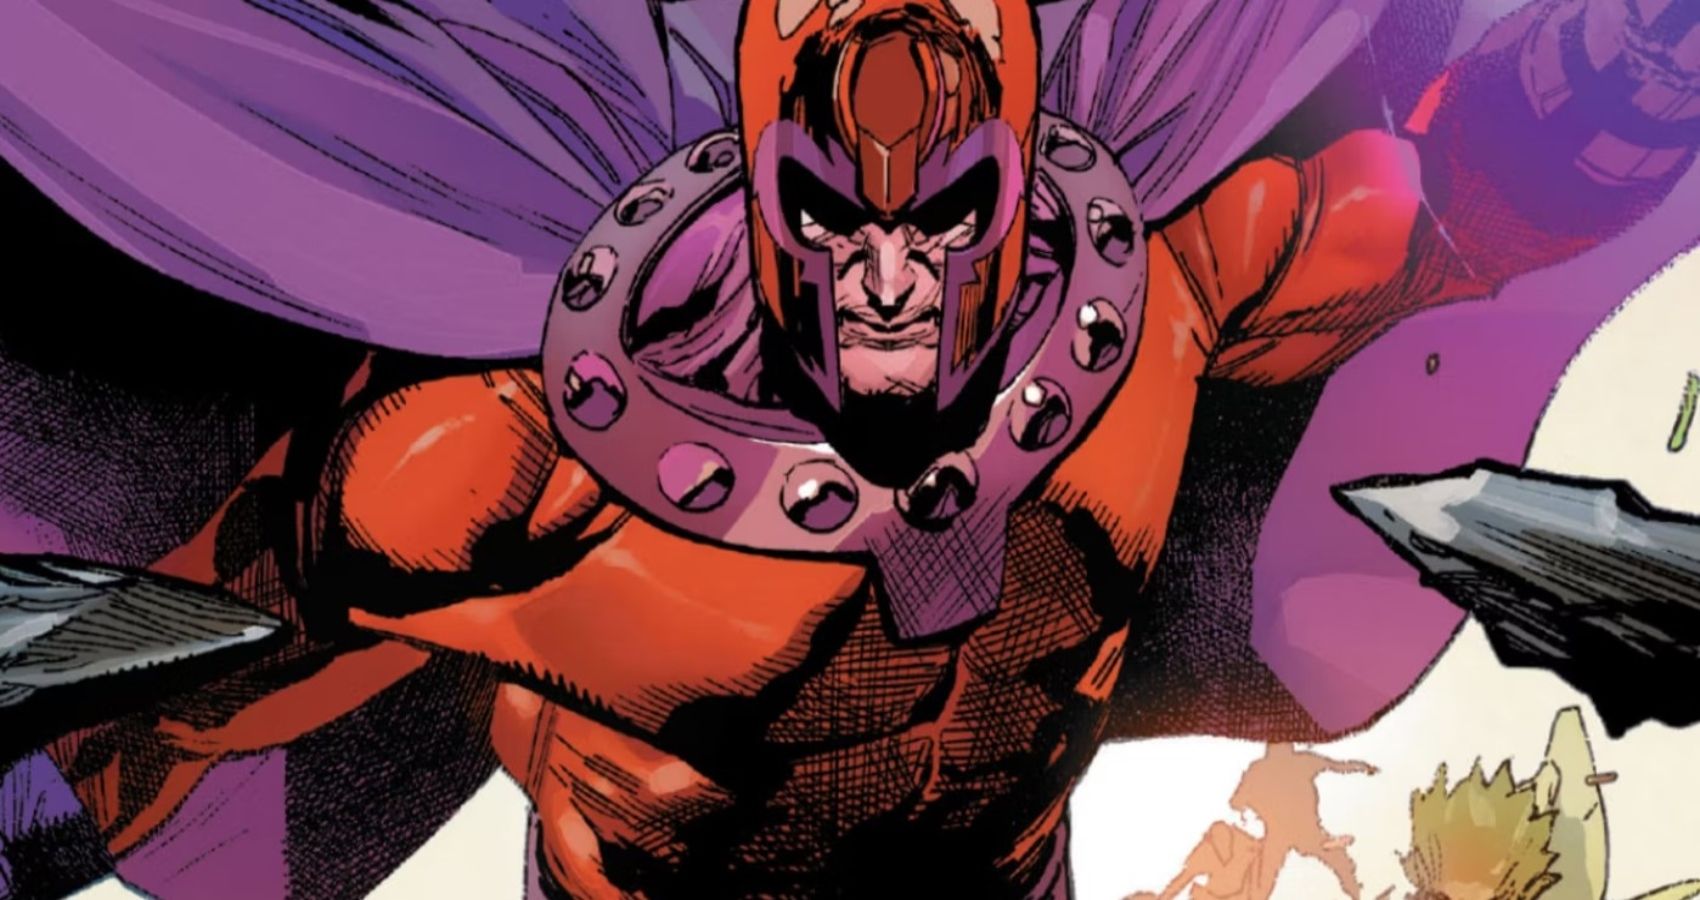 Magneto---X-Men-Comics.jpg